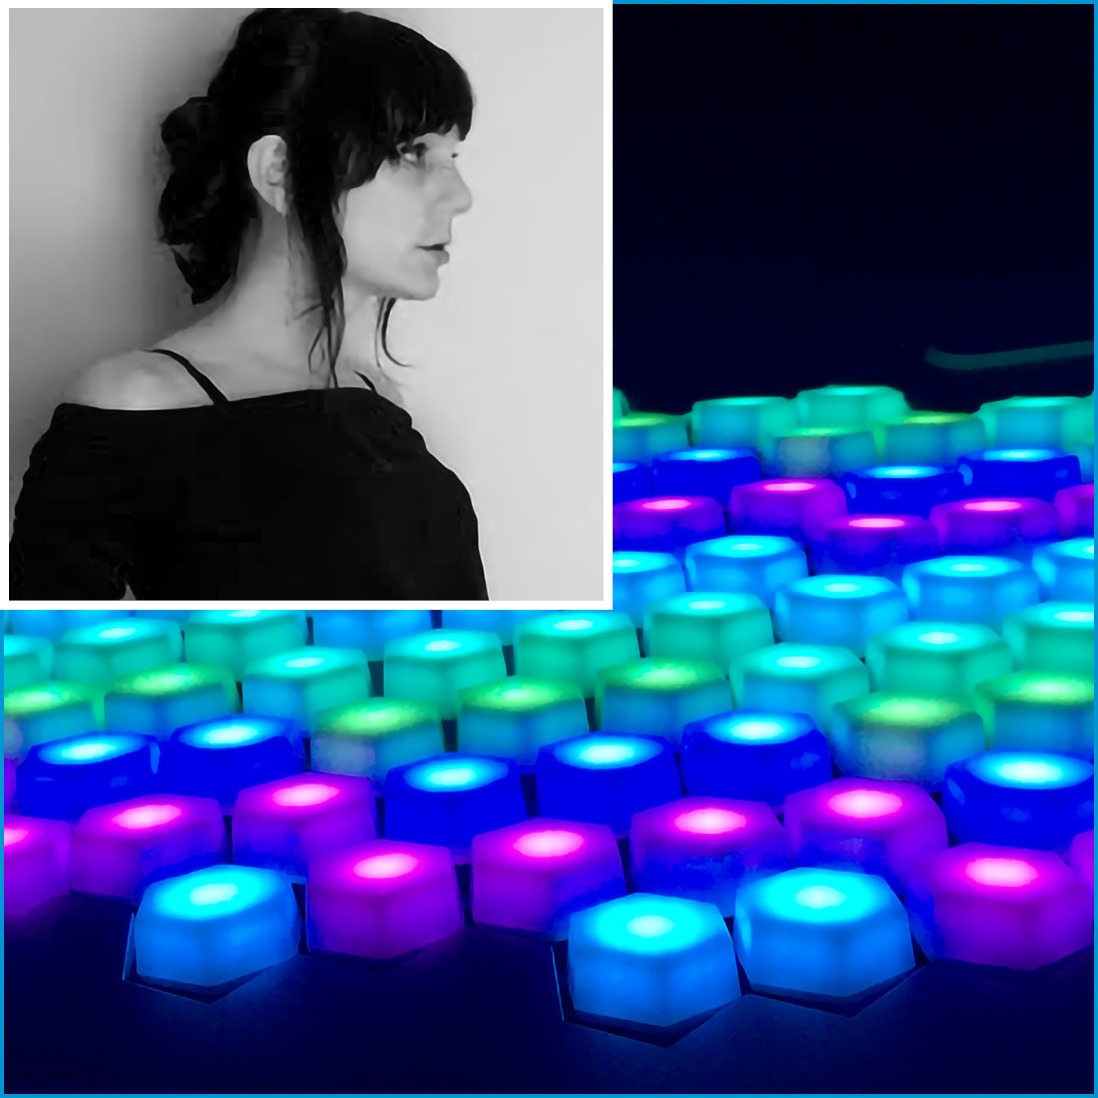 Portrait of Zhea Erose's profile, on top of a close-up of backlit hexagonal keyboard keys